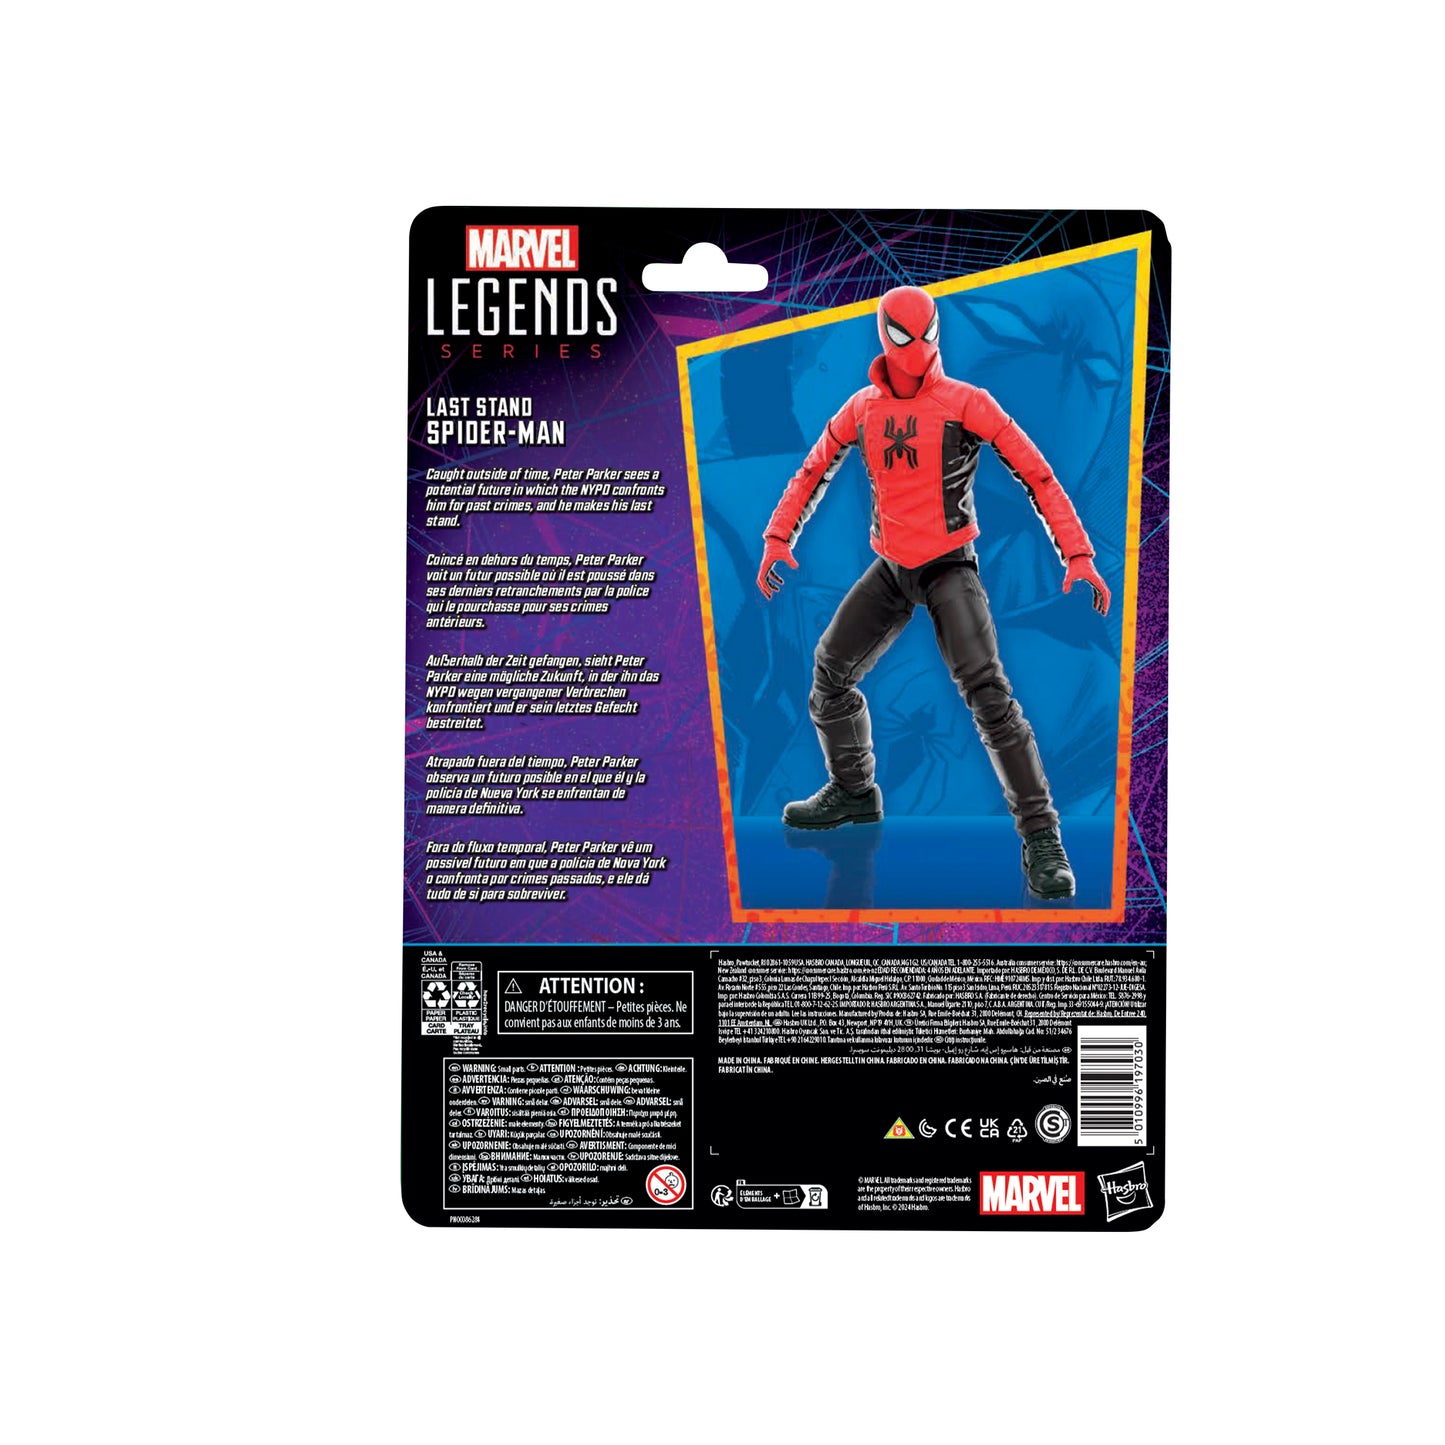 Marvel Legends Series Last Stand Spider-Man Action Figure Toy